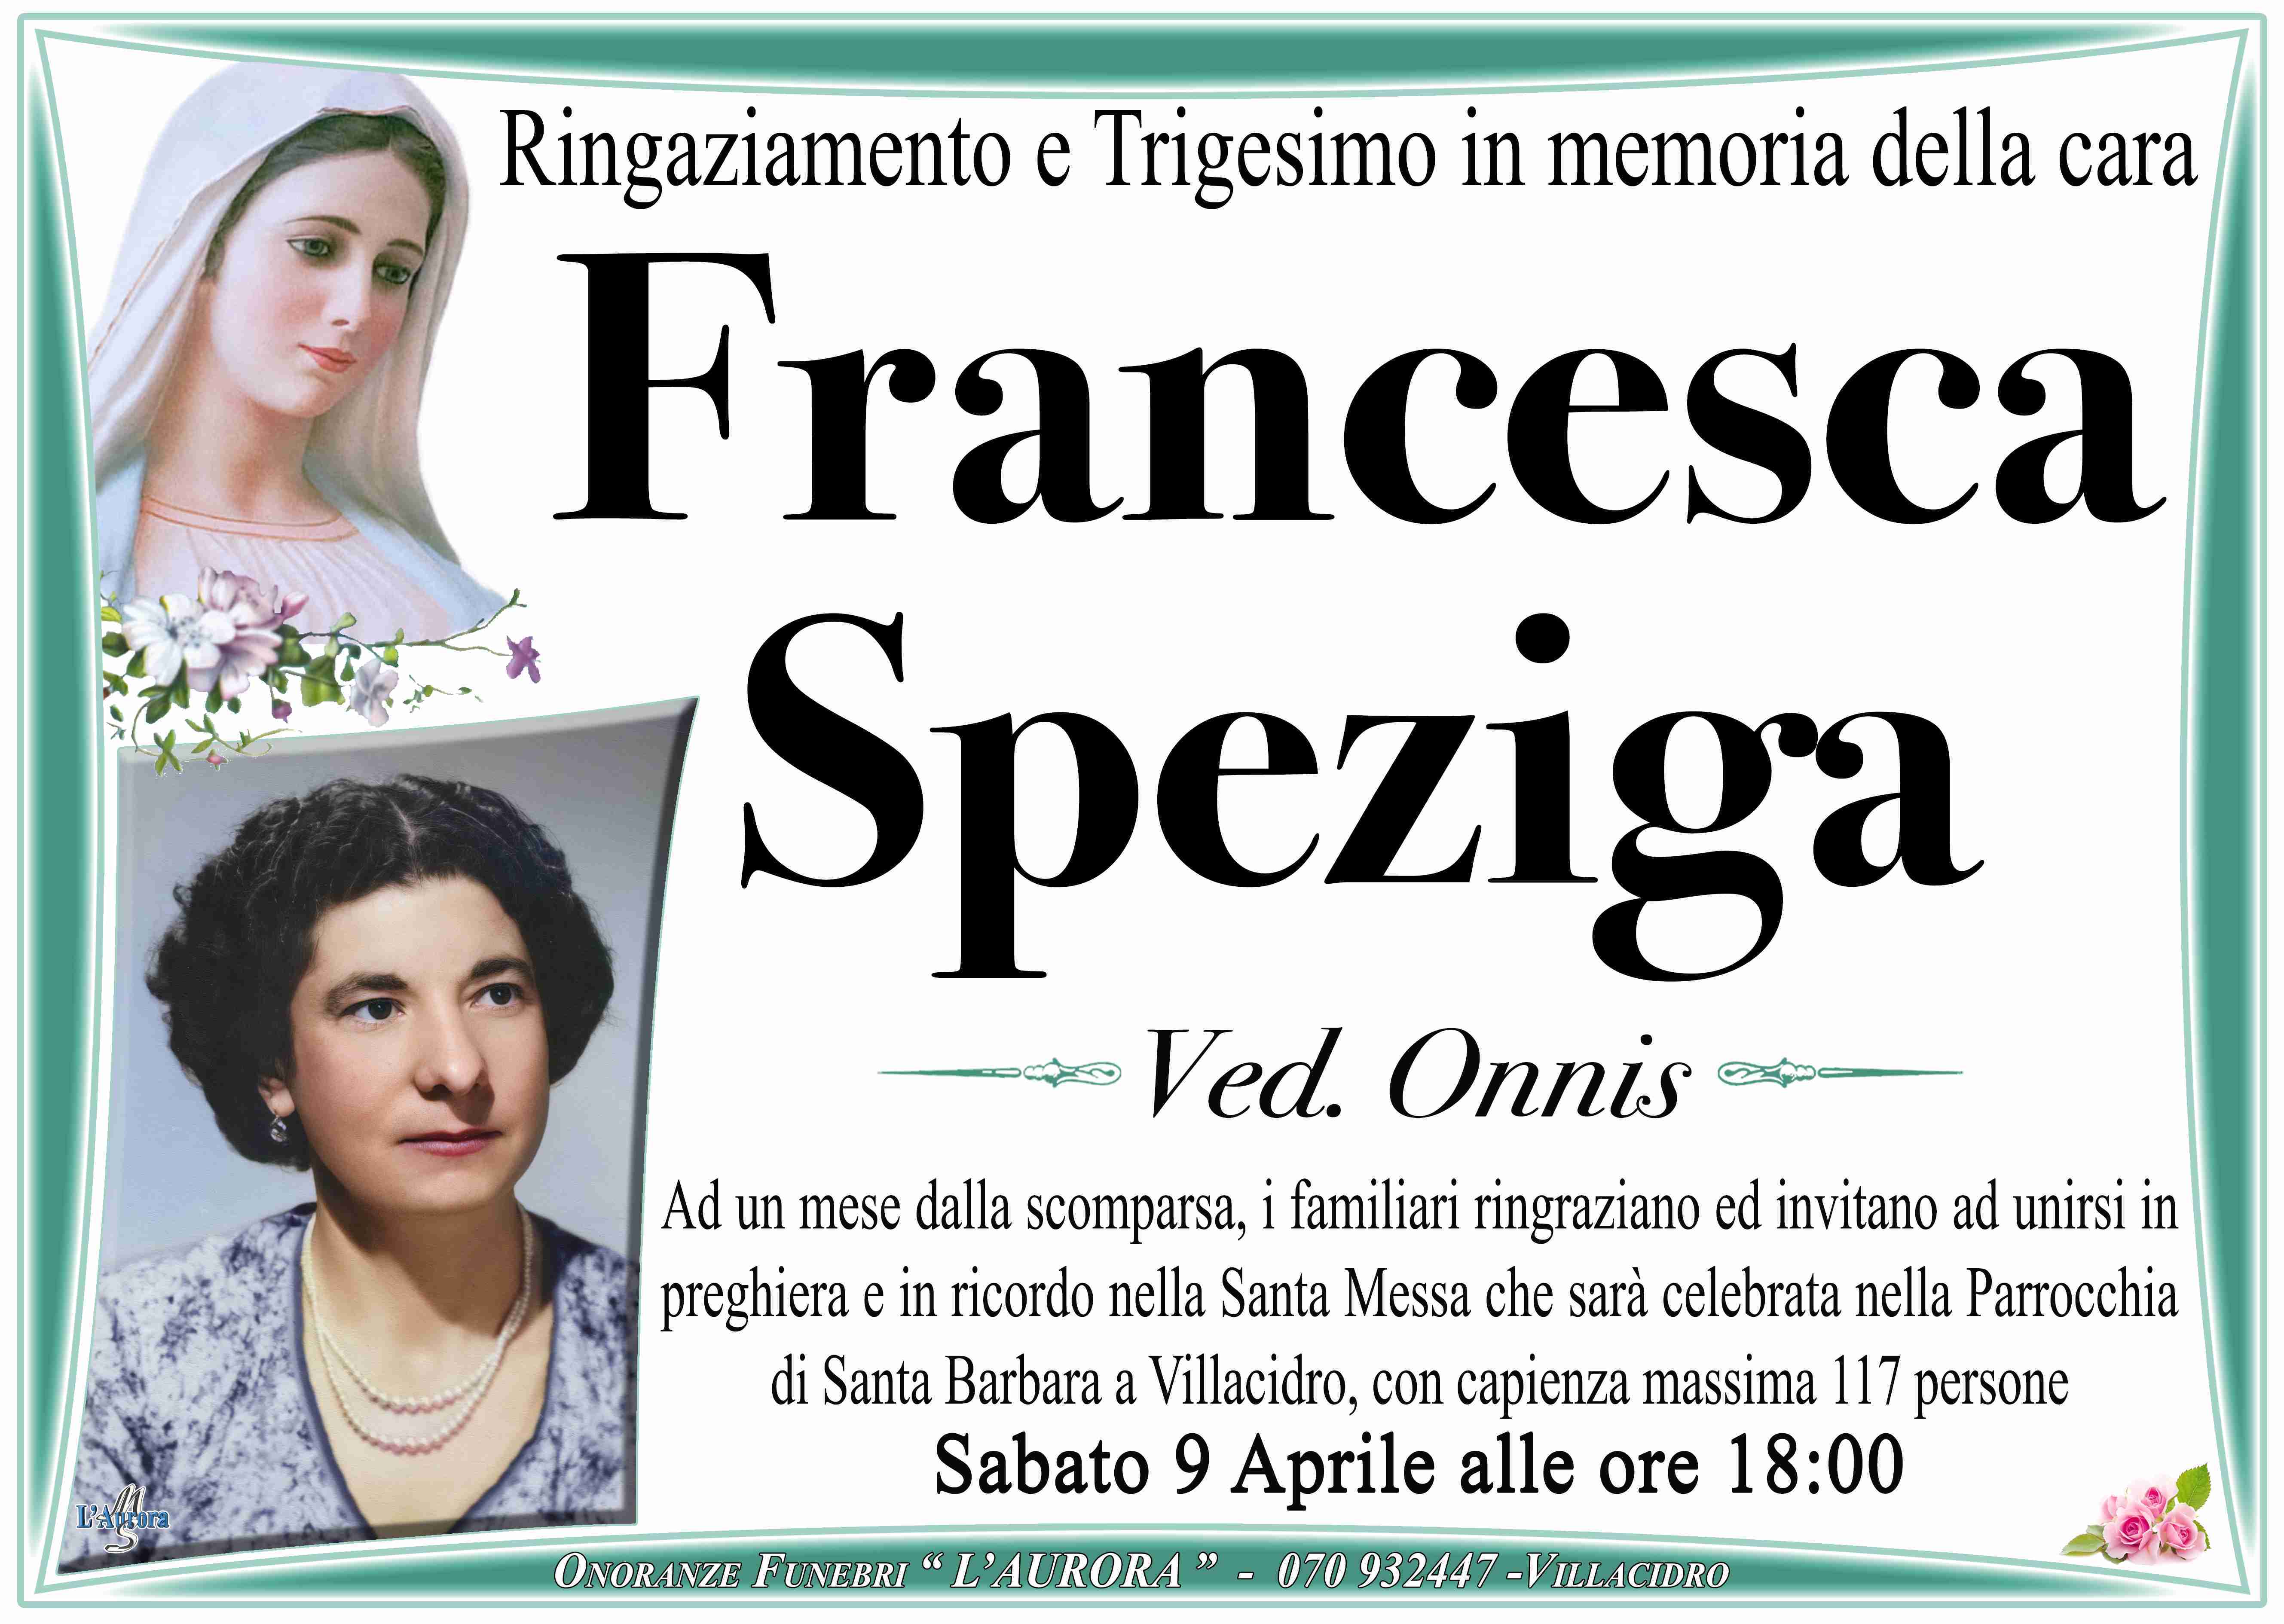 Francesca Speziga